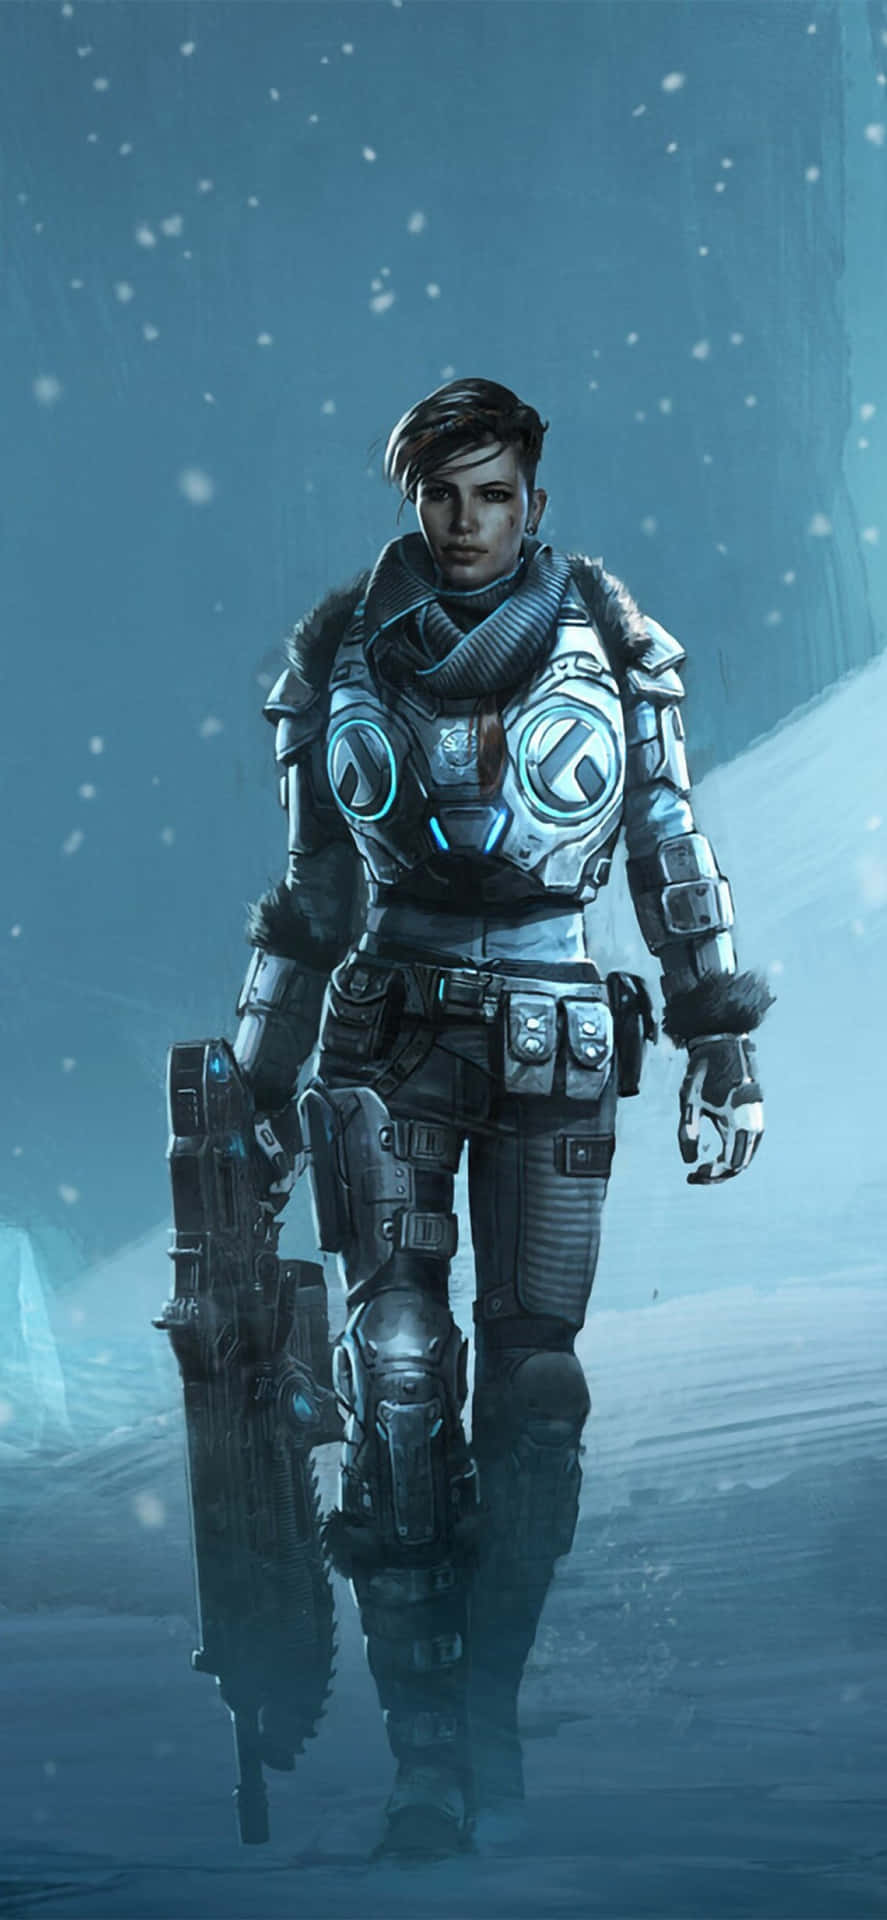 Sfondoper Iphone Xs Max Di Gears Of War 5 Con Kait Snow.